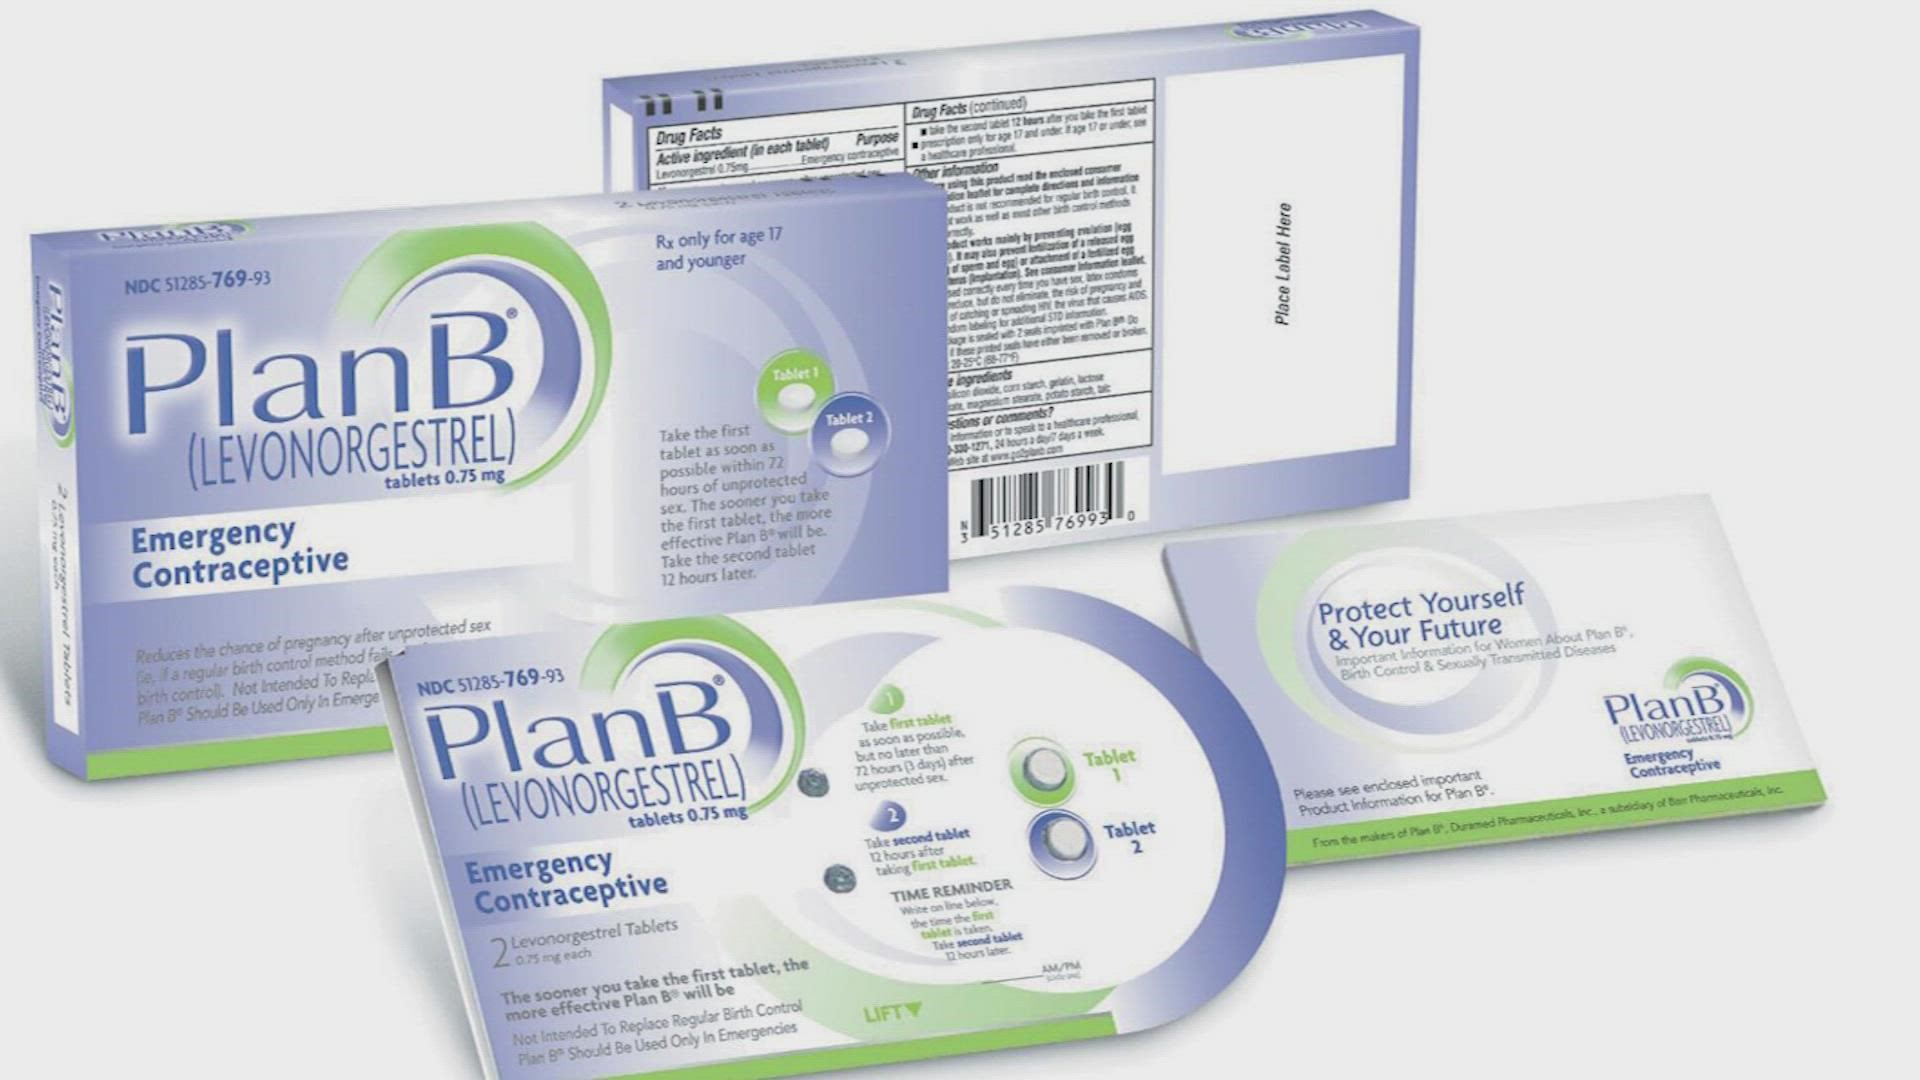 Plan B One-Step Emergency Contraceptive (72 Hour Efficacy Window) 